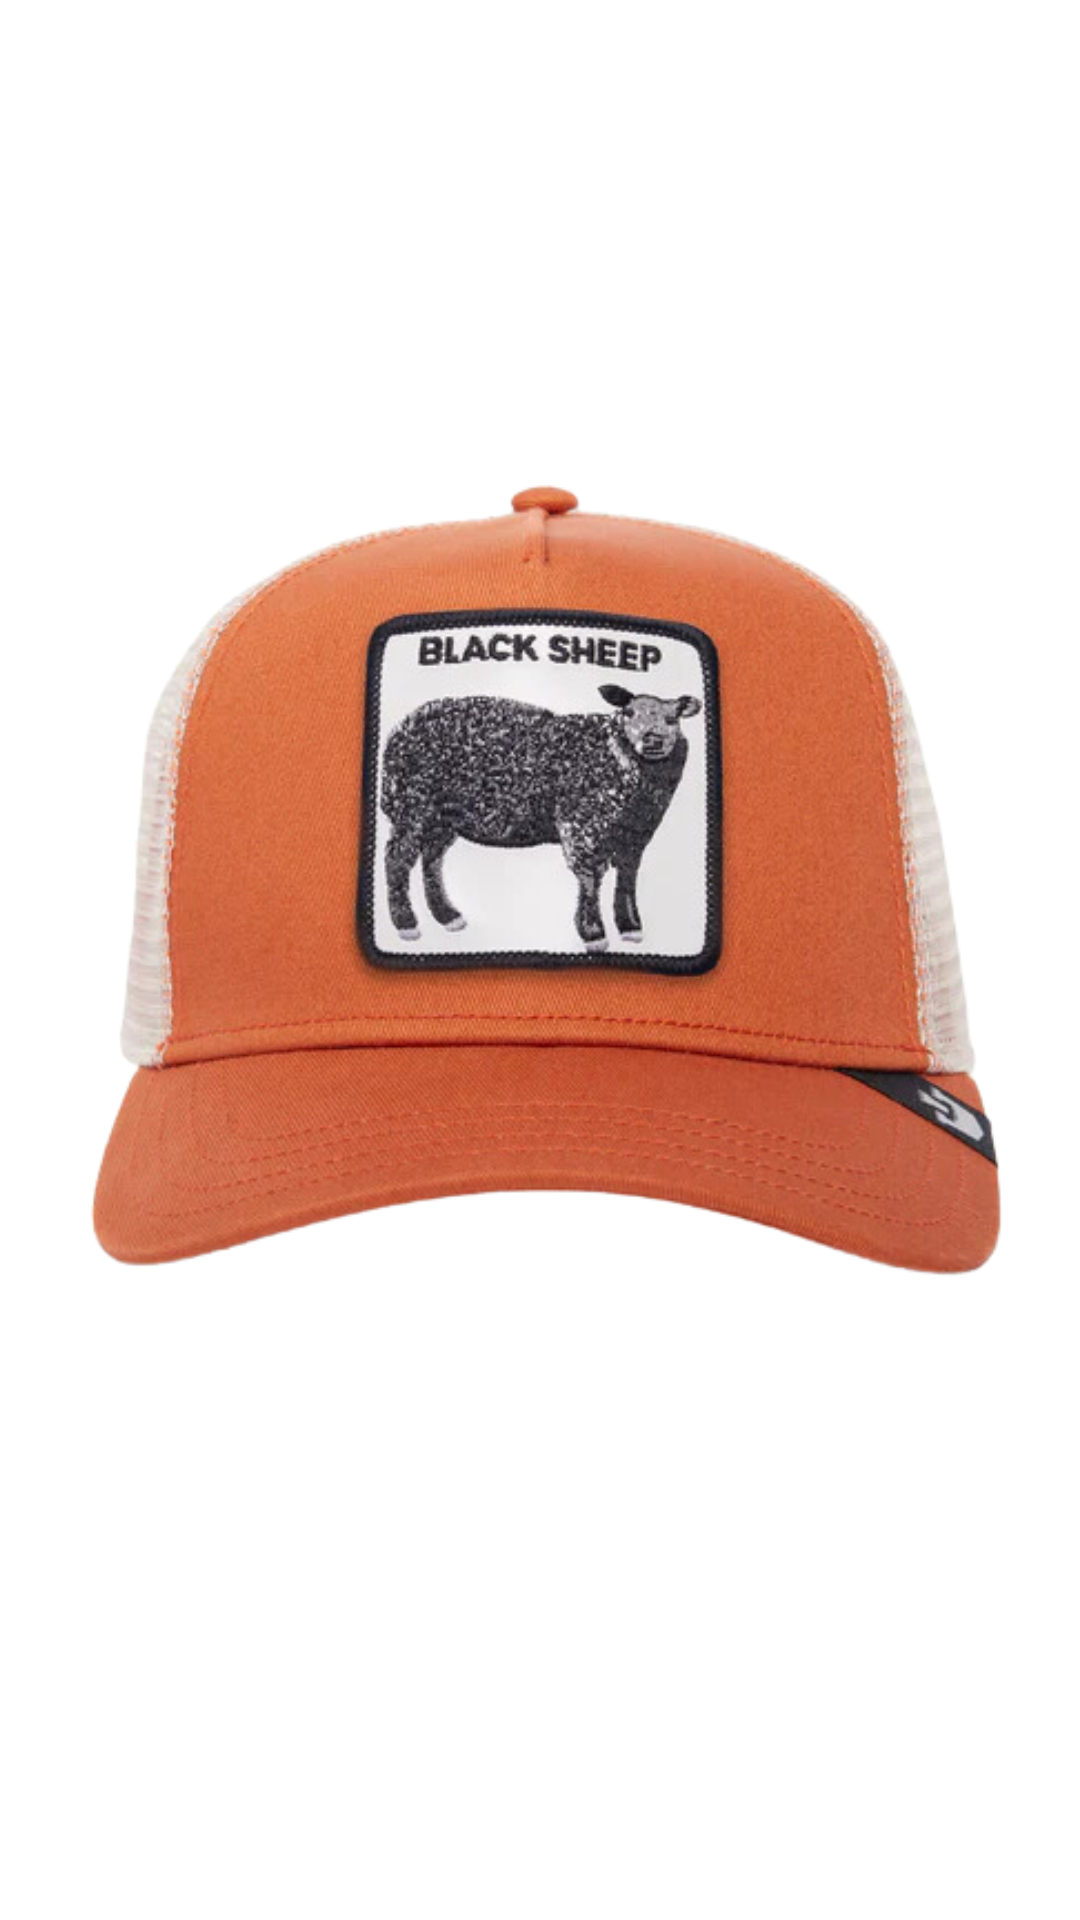 RUS The Black Sheep Hat